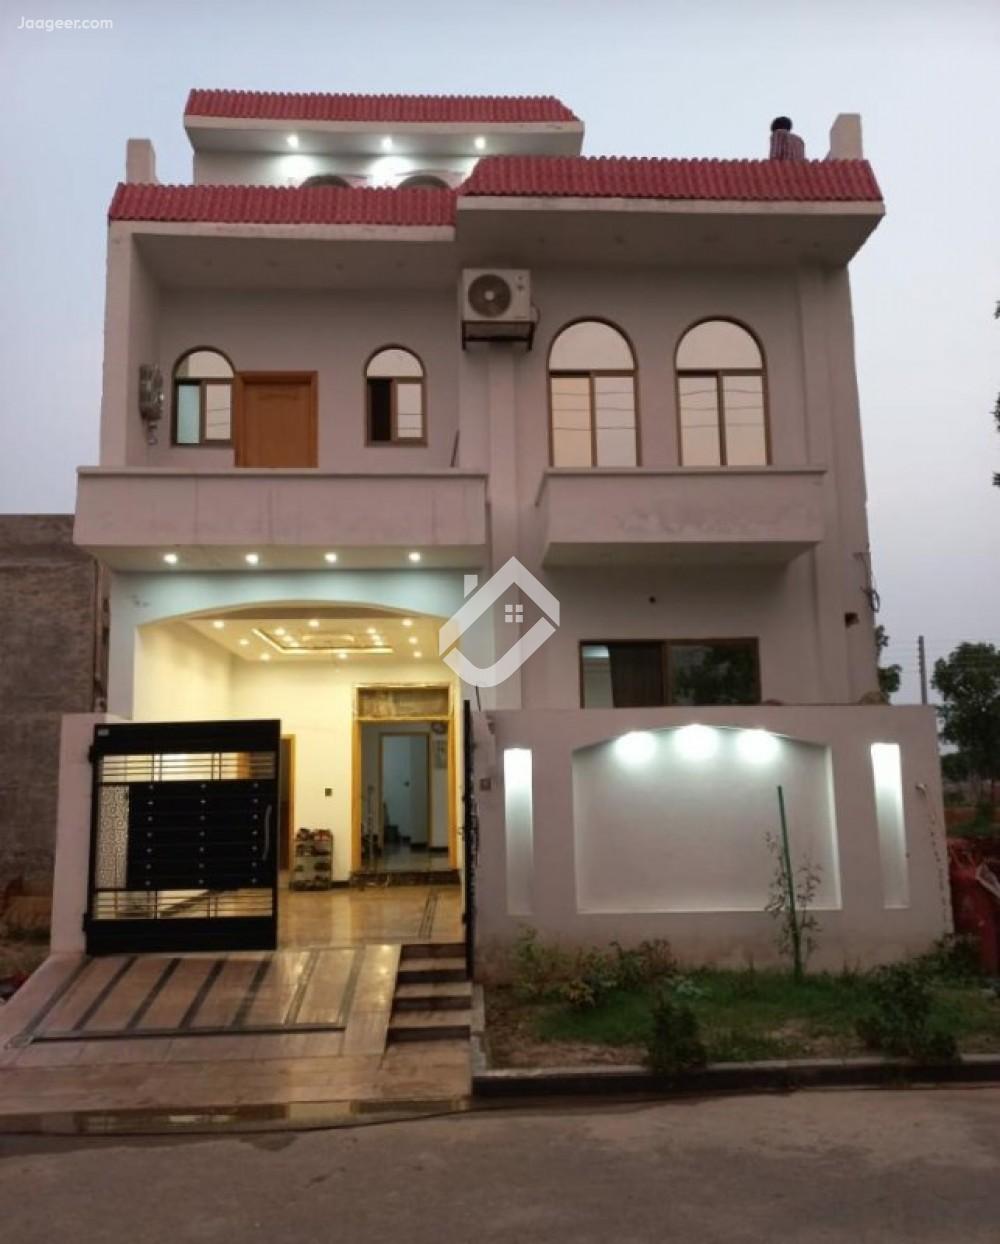 Main image 5 Marla Double Storey House For Sale In Al Hafeez Garden Phase 2 Main Canal Road  Al Hafeez Garden, Lahore